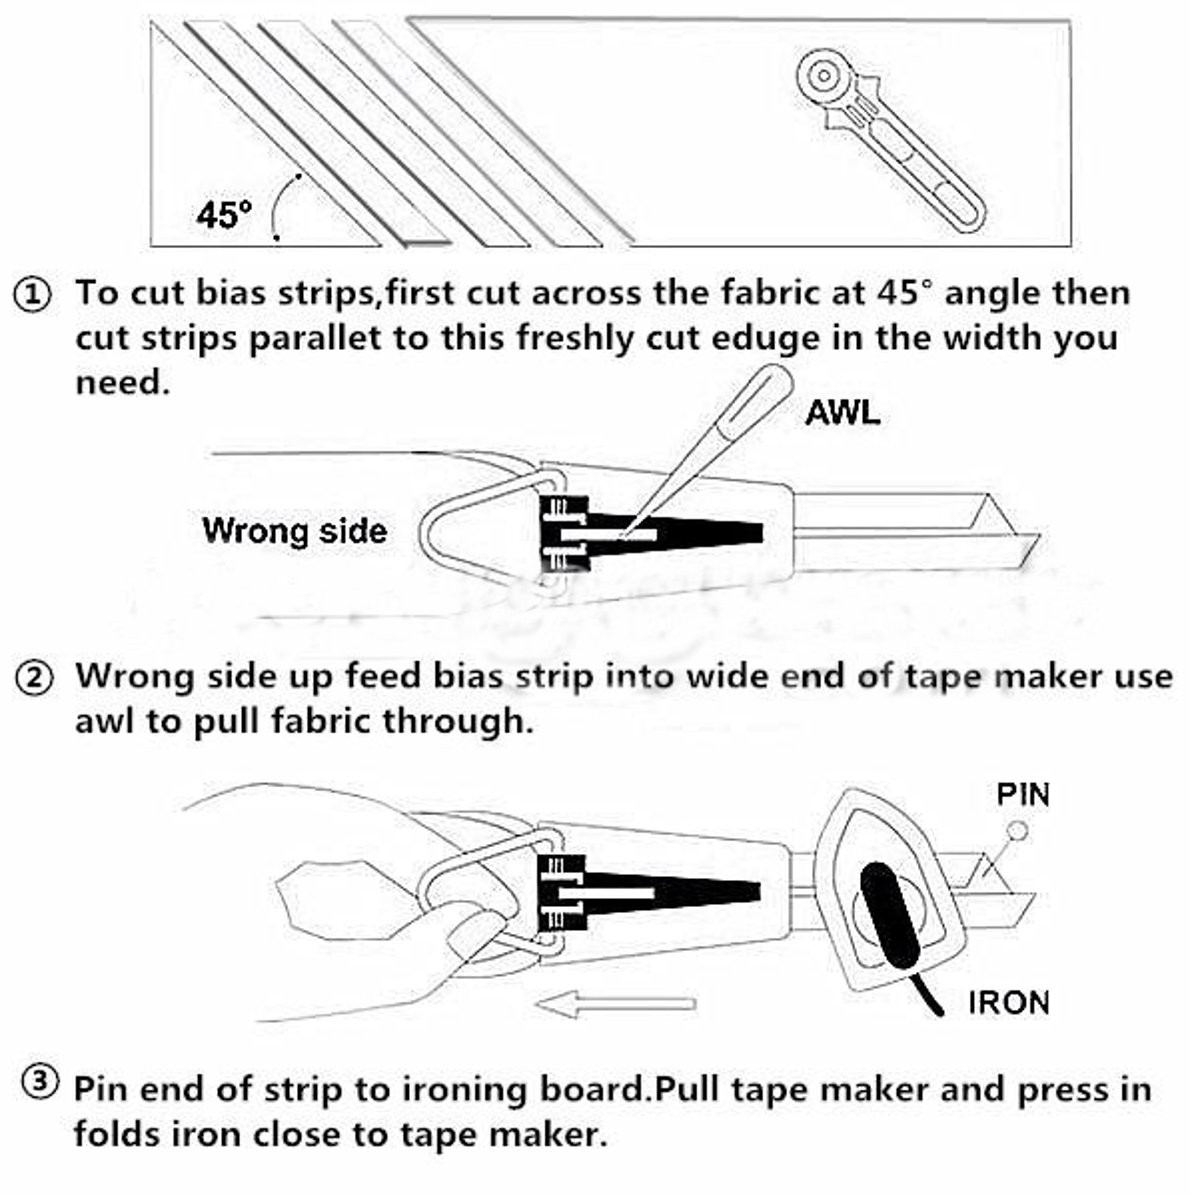 6121825mm-Fabric-Bias-Binding-Tape-Maker-Kit-Set-Binder-Foot-For-Sewing-Quilting--AWL-1114495-3